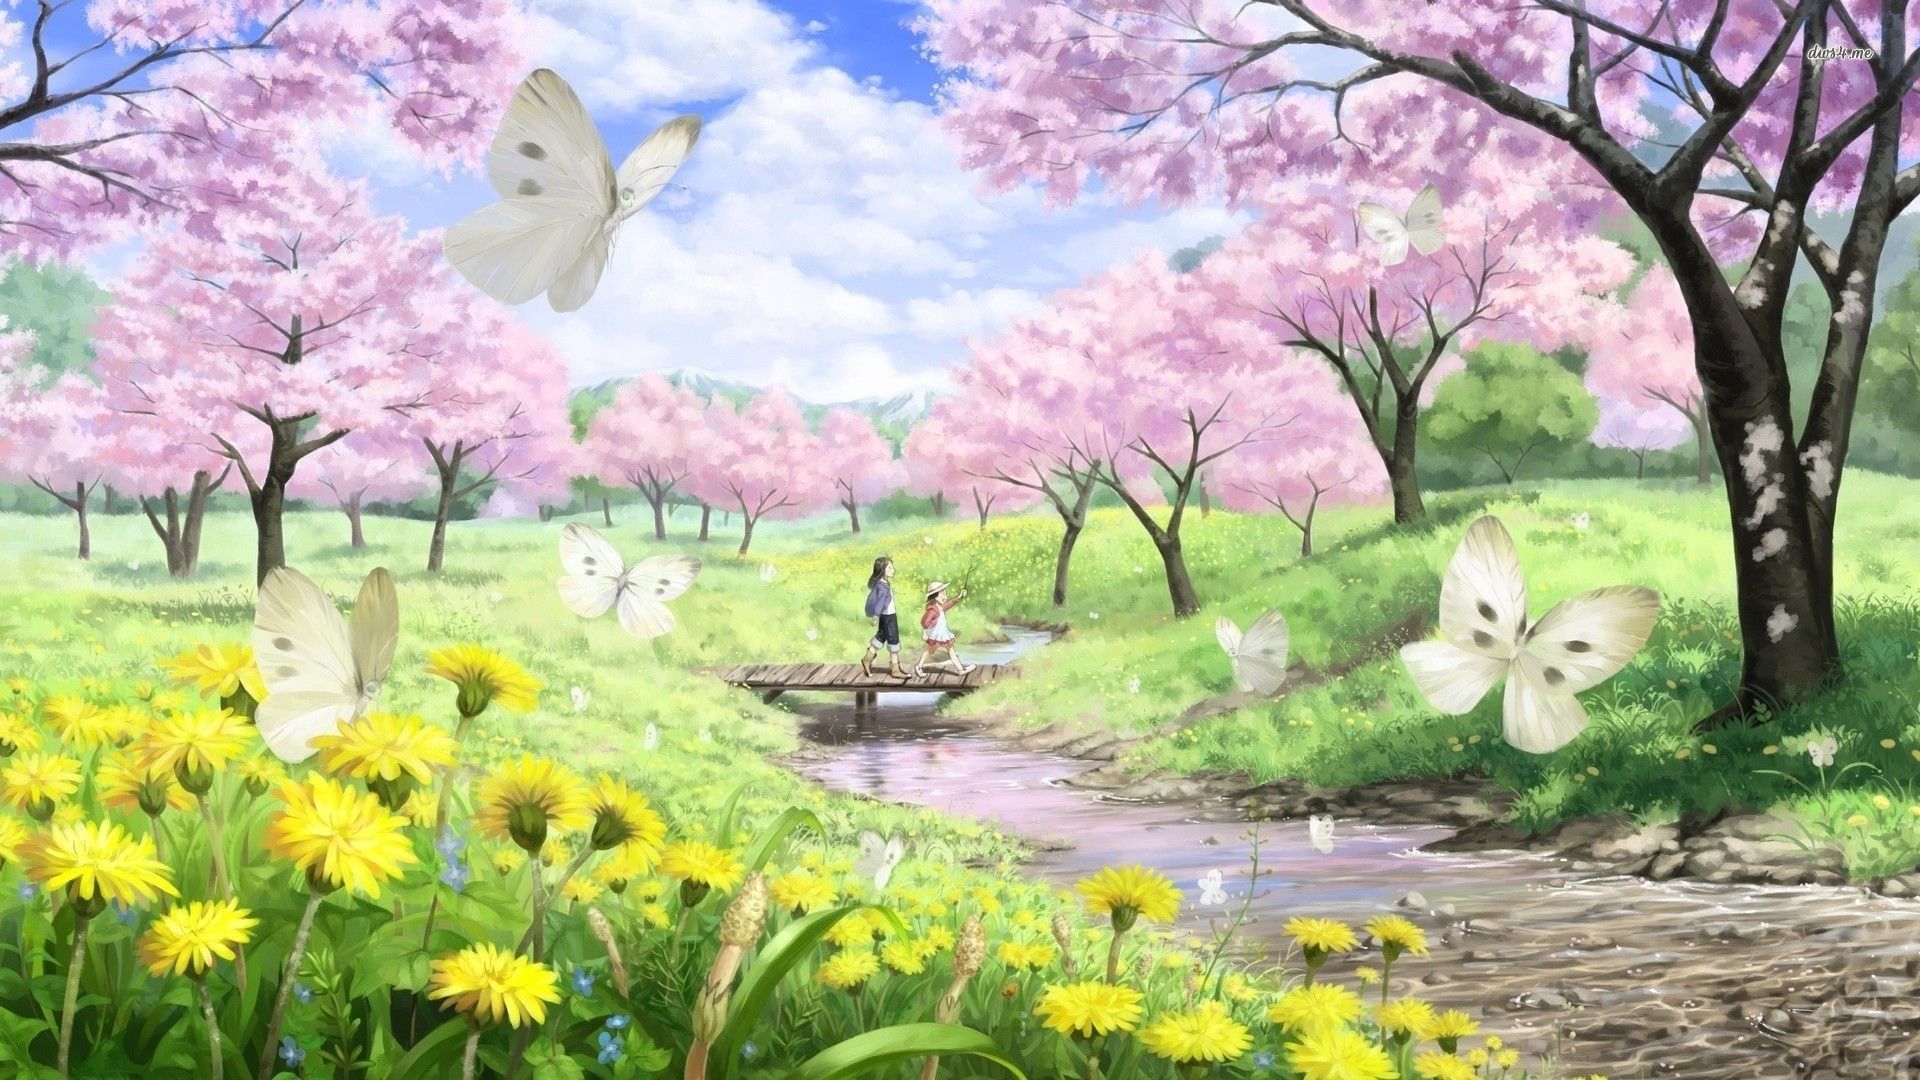 Sunny Spring Day Wallpaper HD. Nature desktop wallpaper, Spring wallpaper, Anime cherry blossom